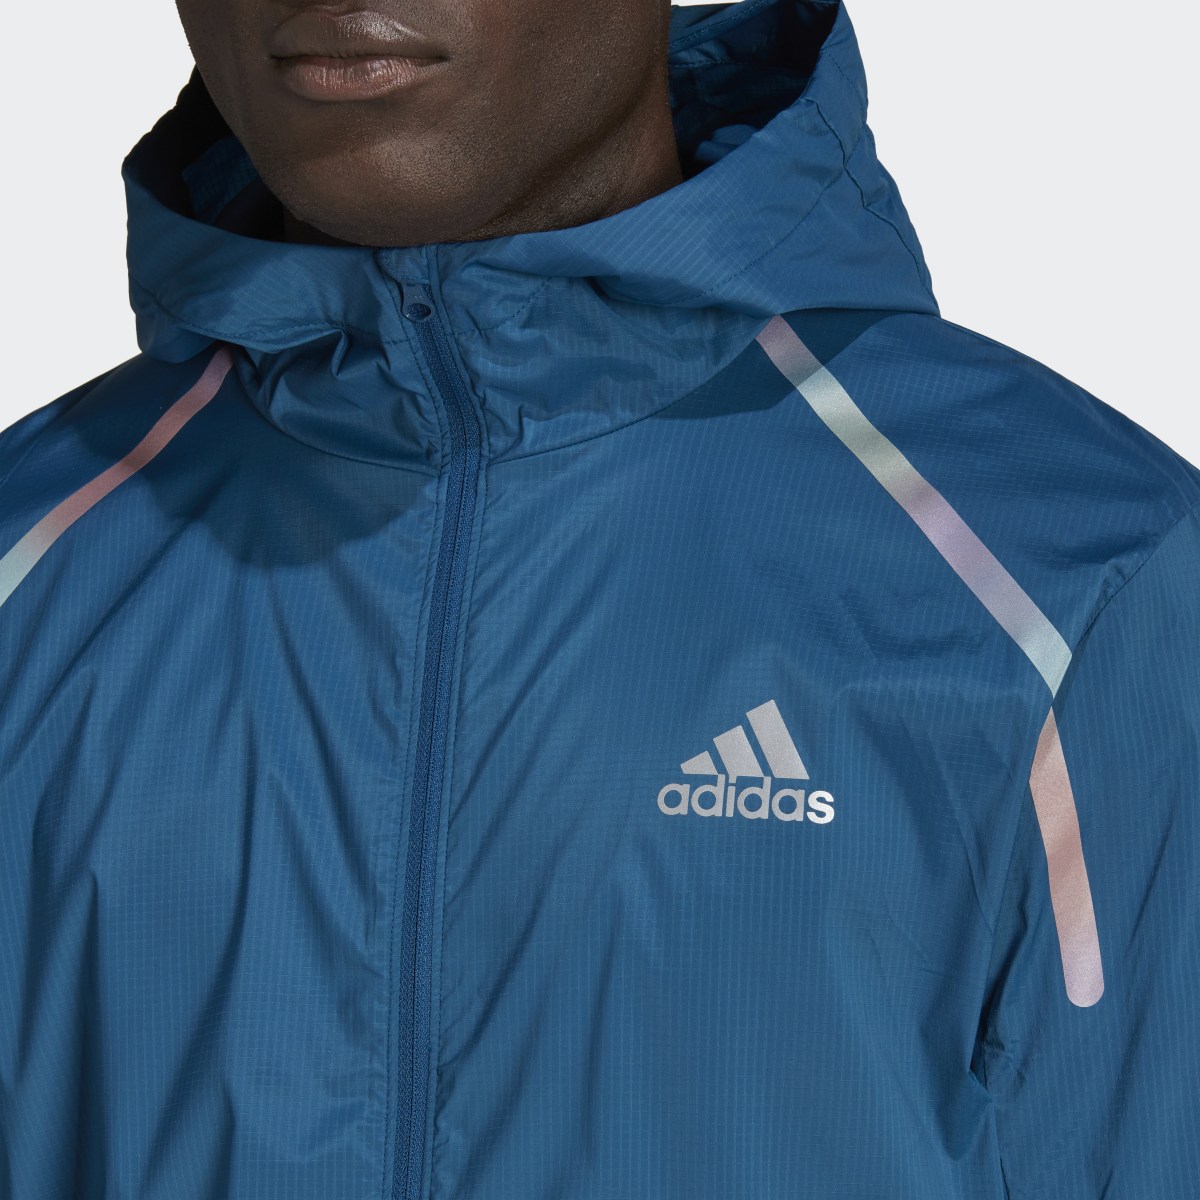 Adidas Marathon Jacket. 6